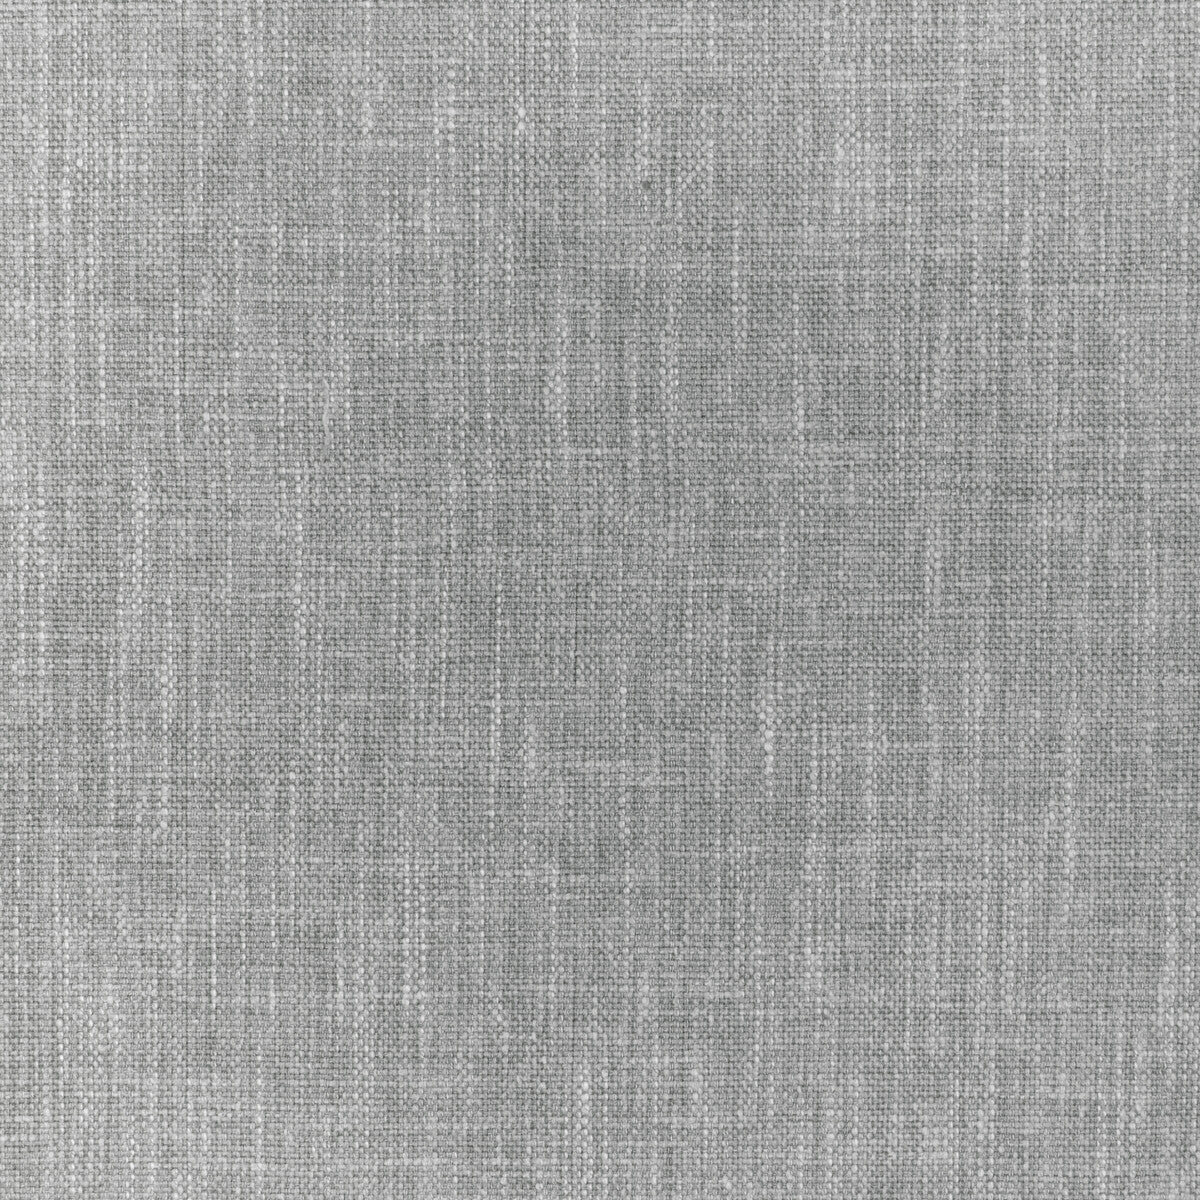 Kravet Smart fabric in 37065-11 color - pattern 37065.11.0 - by Kravet Smart